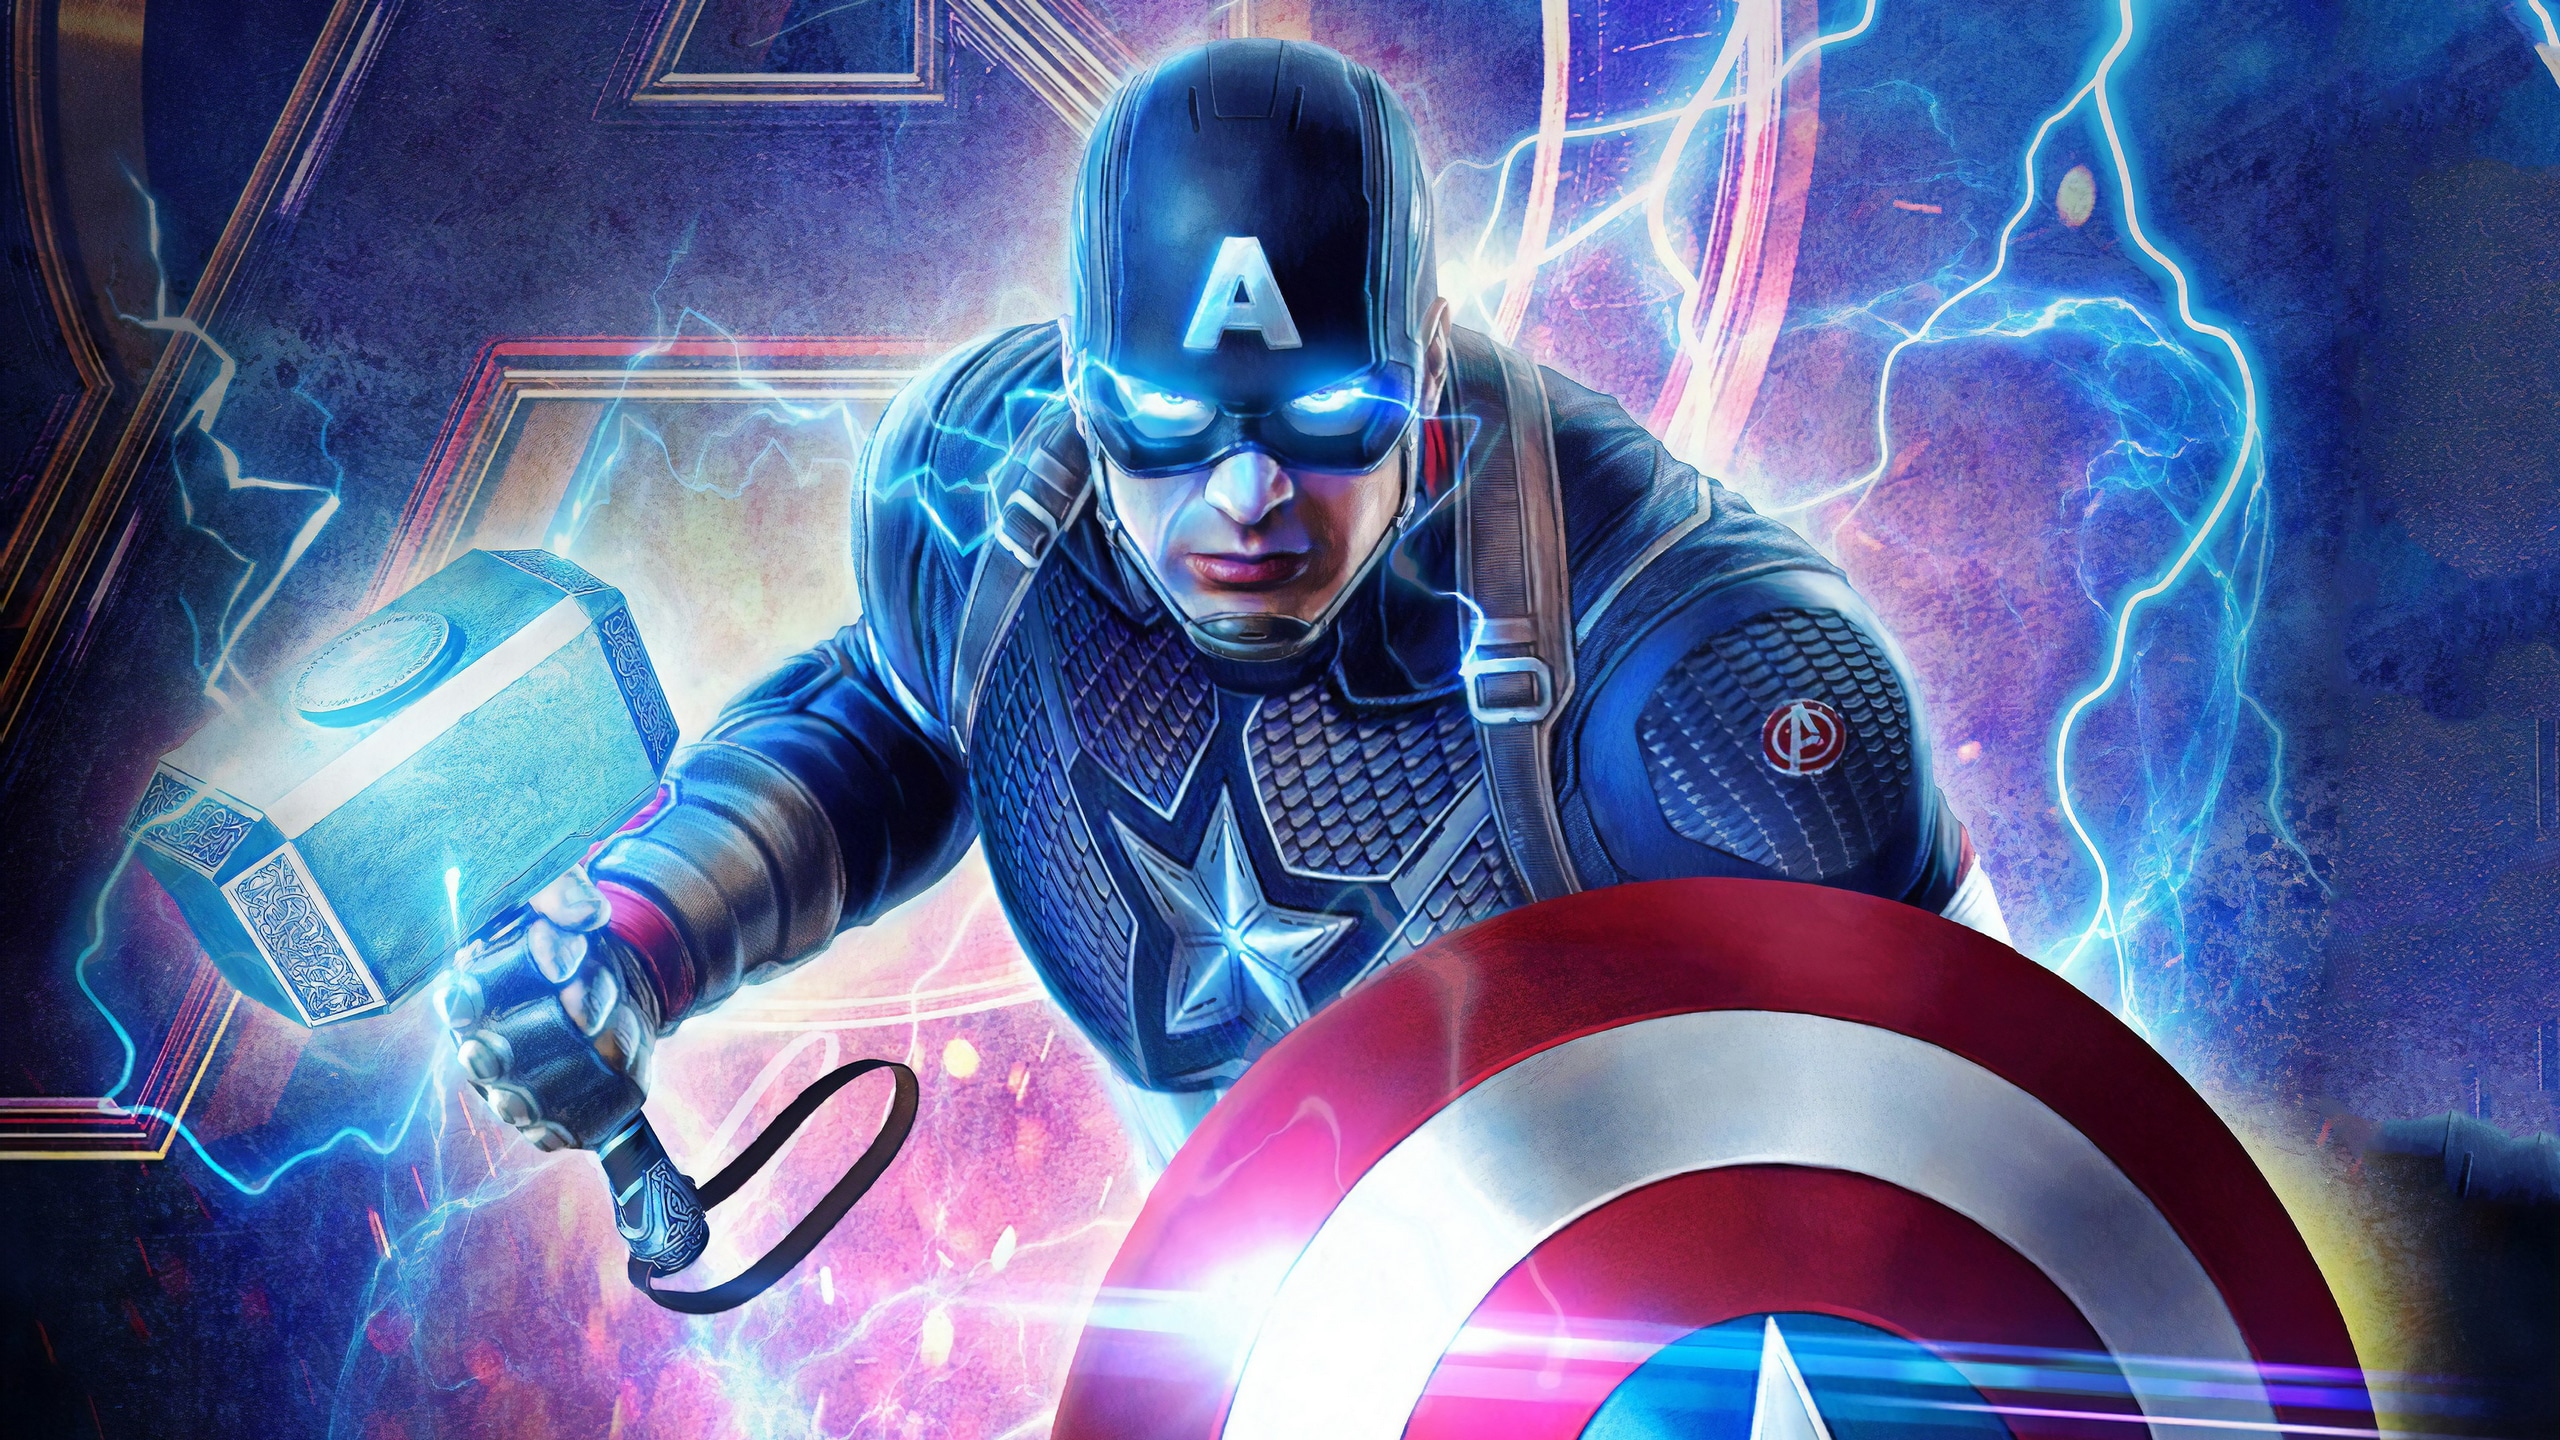 Wallpaper id captain america k hd superheroes artwork avengers endgame behance free download